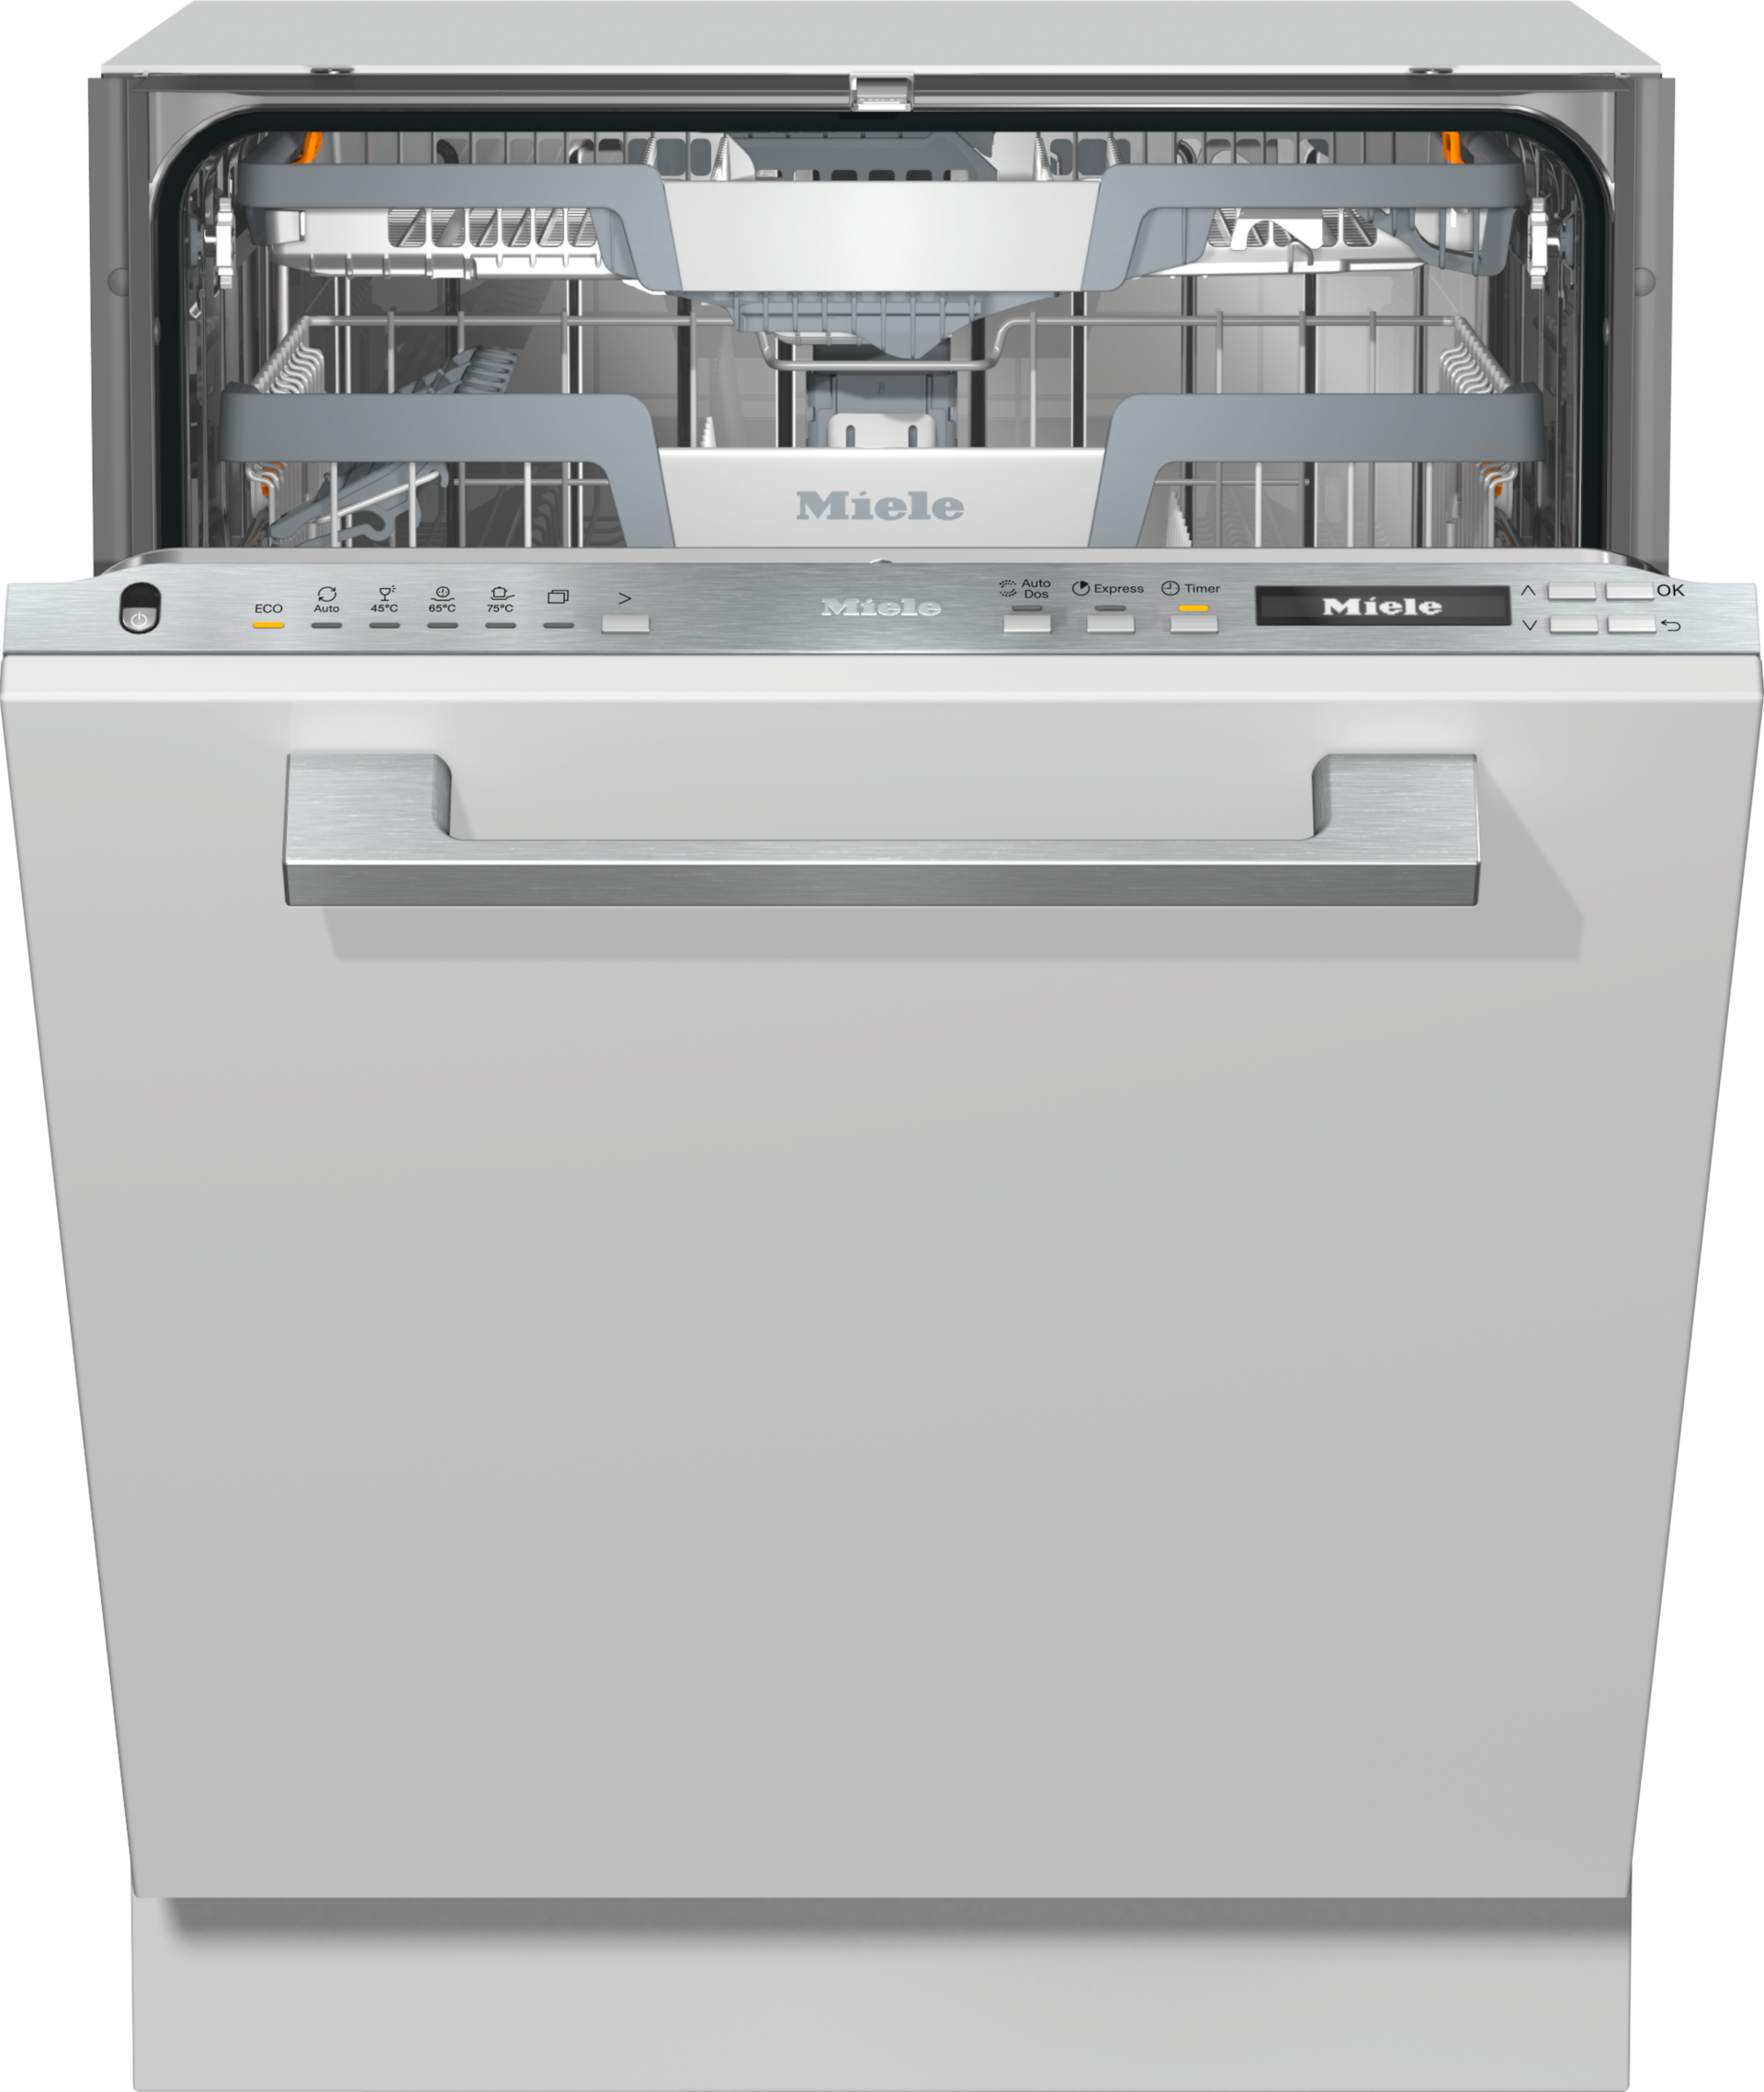 Dishwashers - G 7160 SCVi AutoDos Stainless Steel. - 1